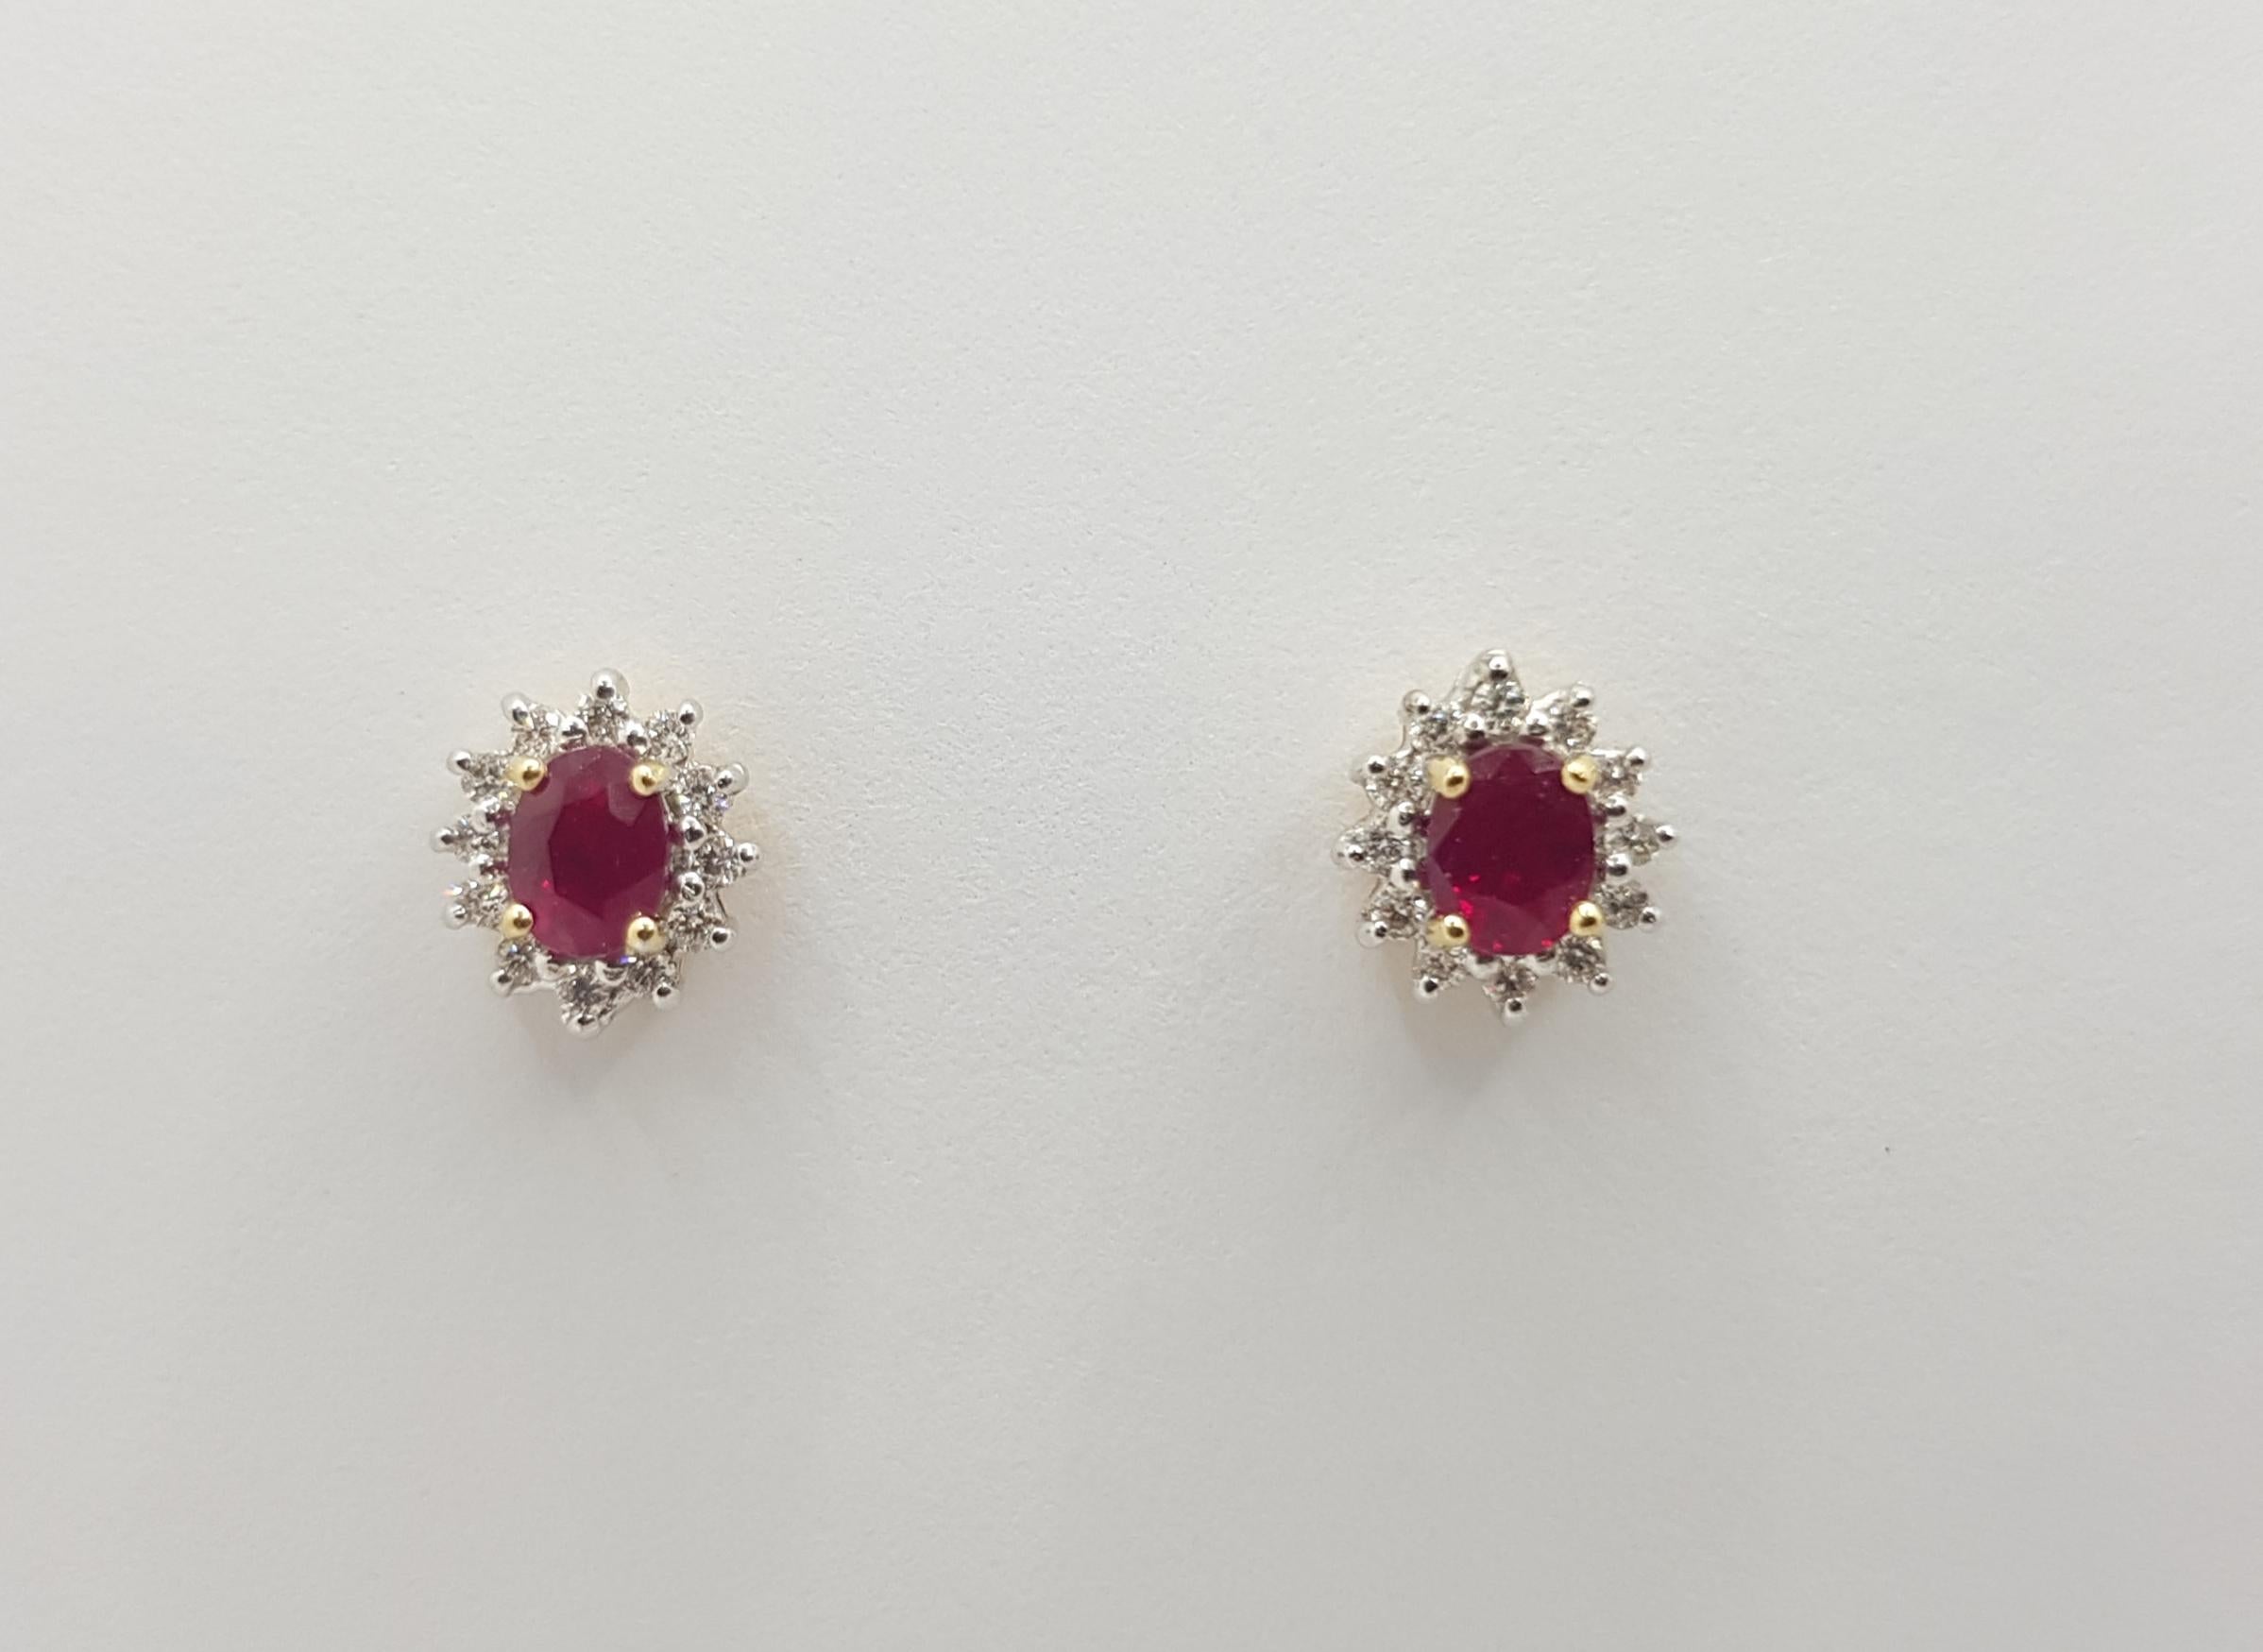 0.6 carat diamond earrings